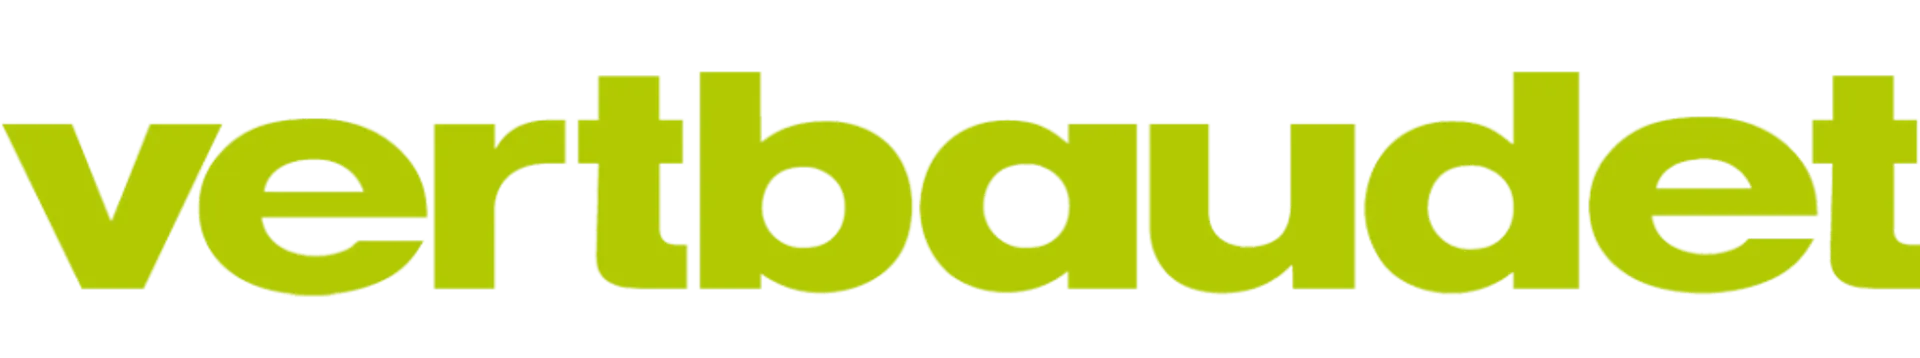 Vertbaudet logo